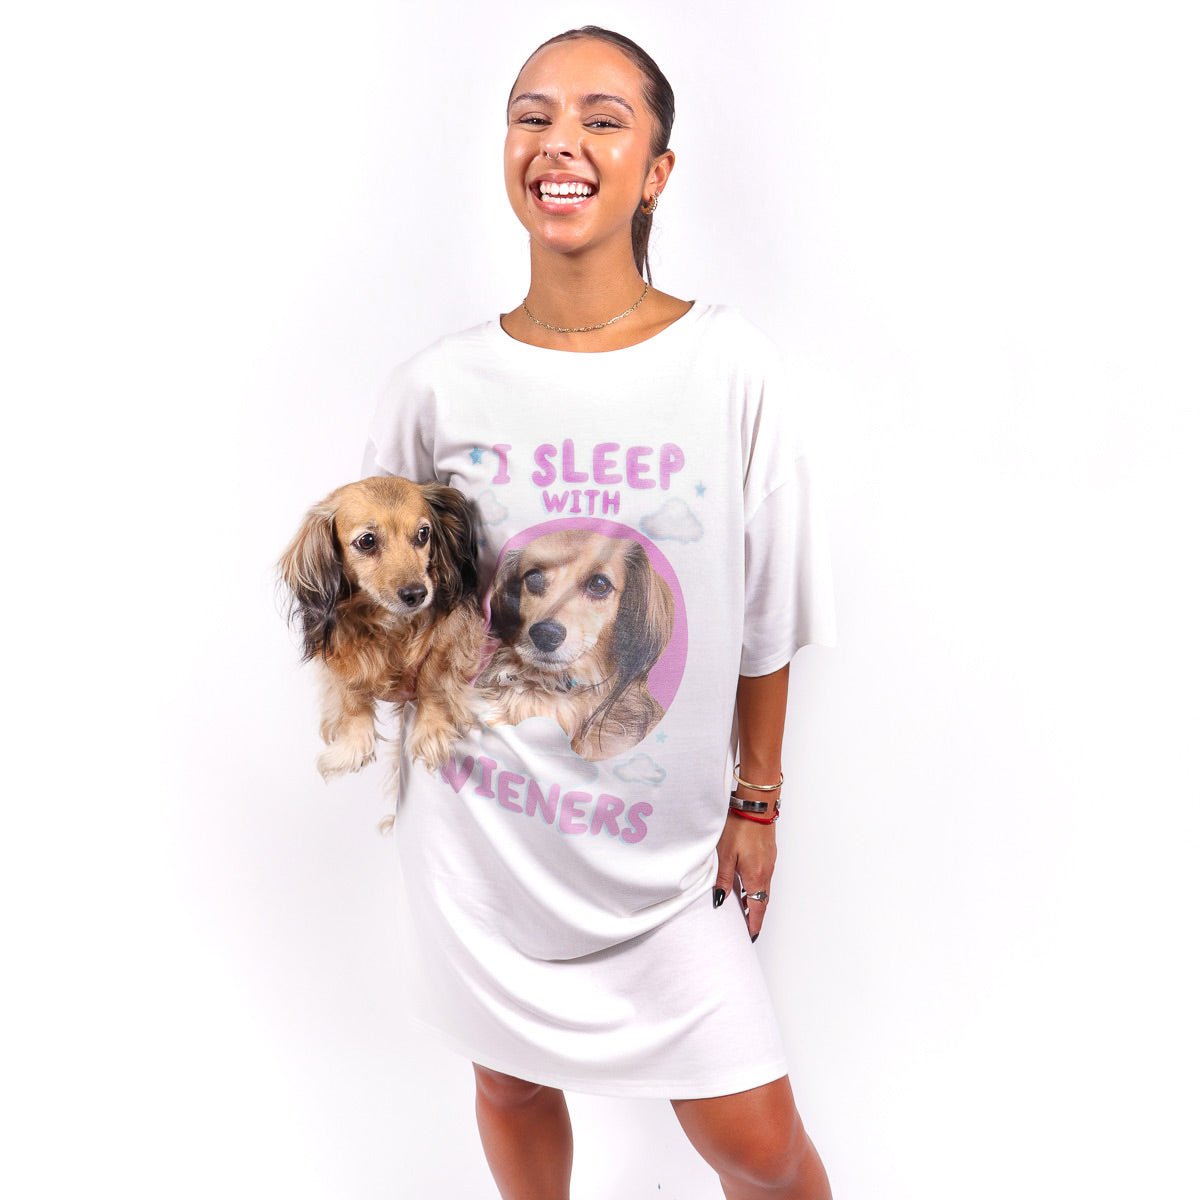 i sleep with wieners custom sleep shirt | single doggo - bean goods